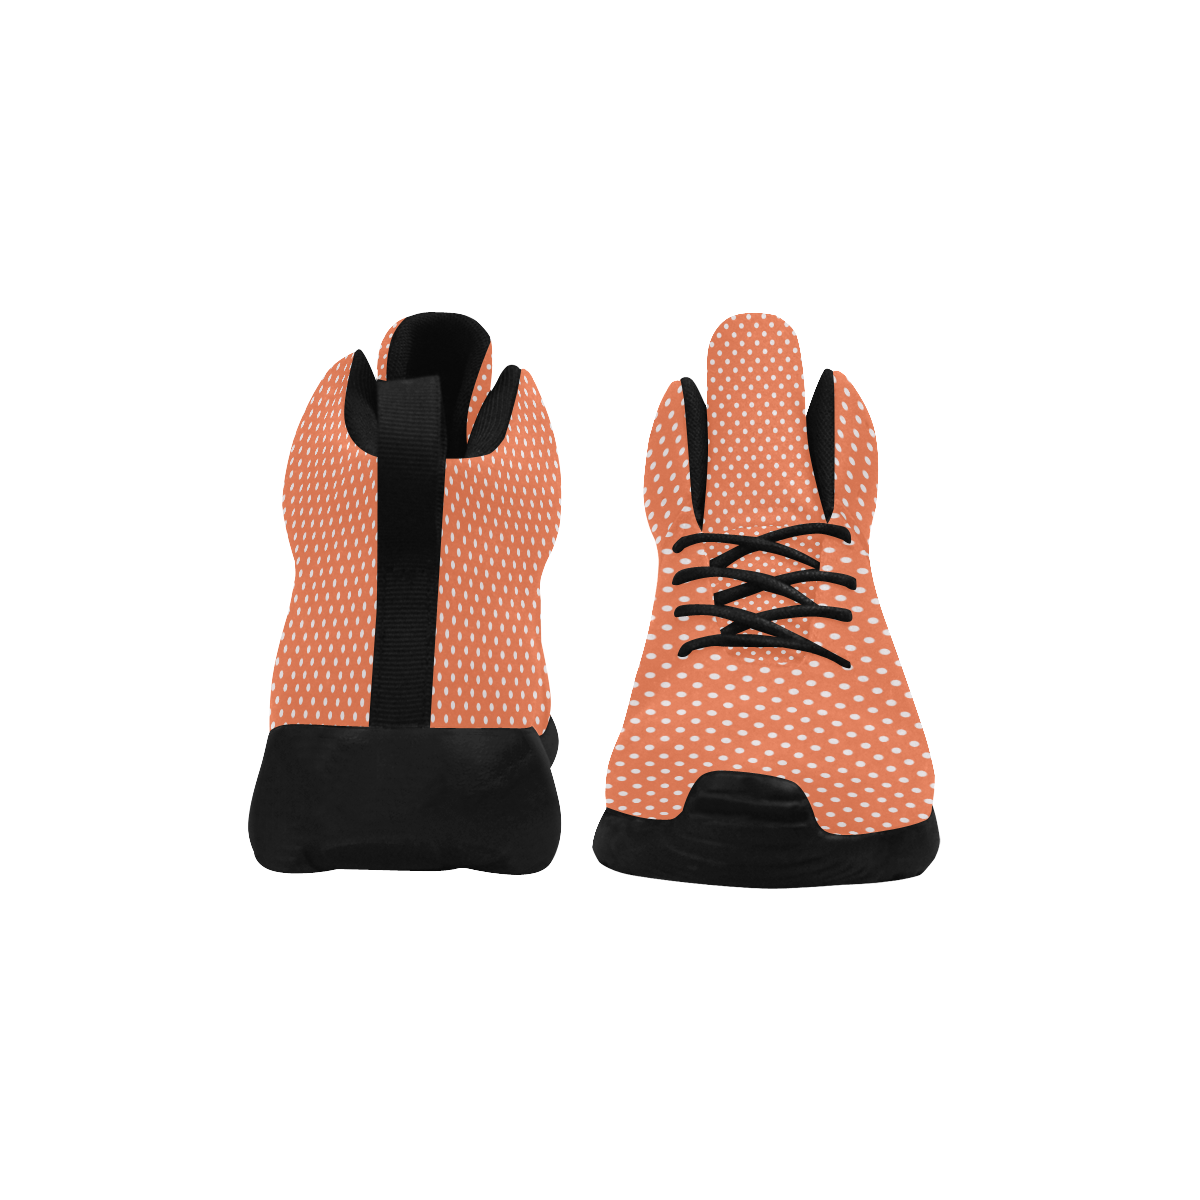 Appricot polka dots Women's Chukka Training Shoes (Model 57502)